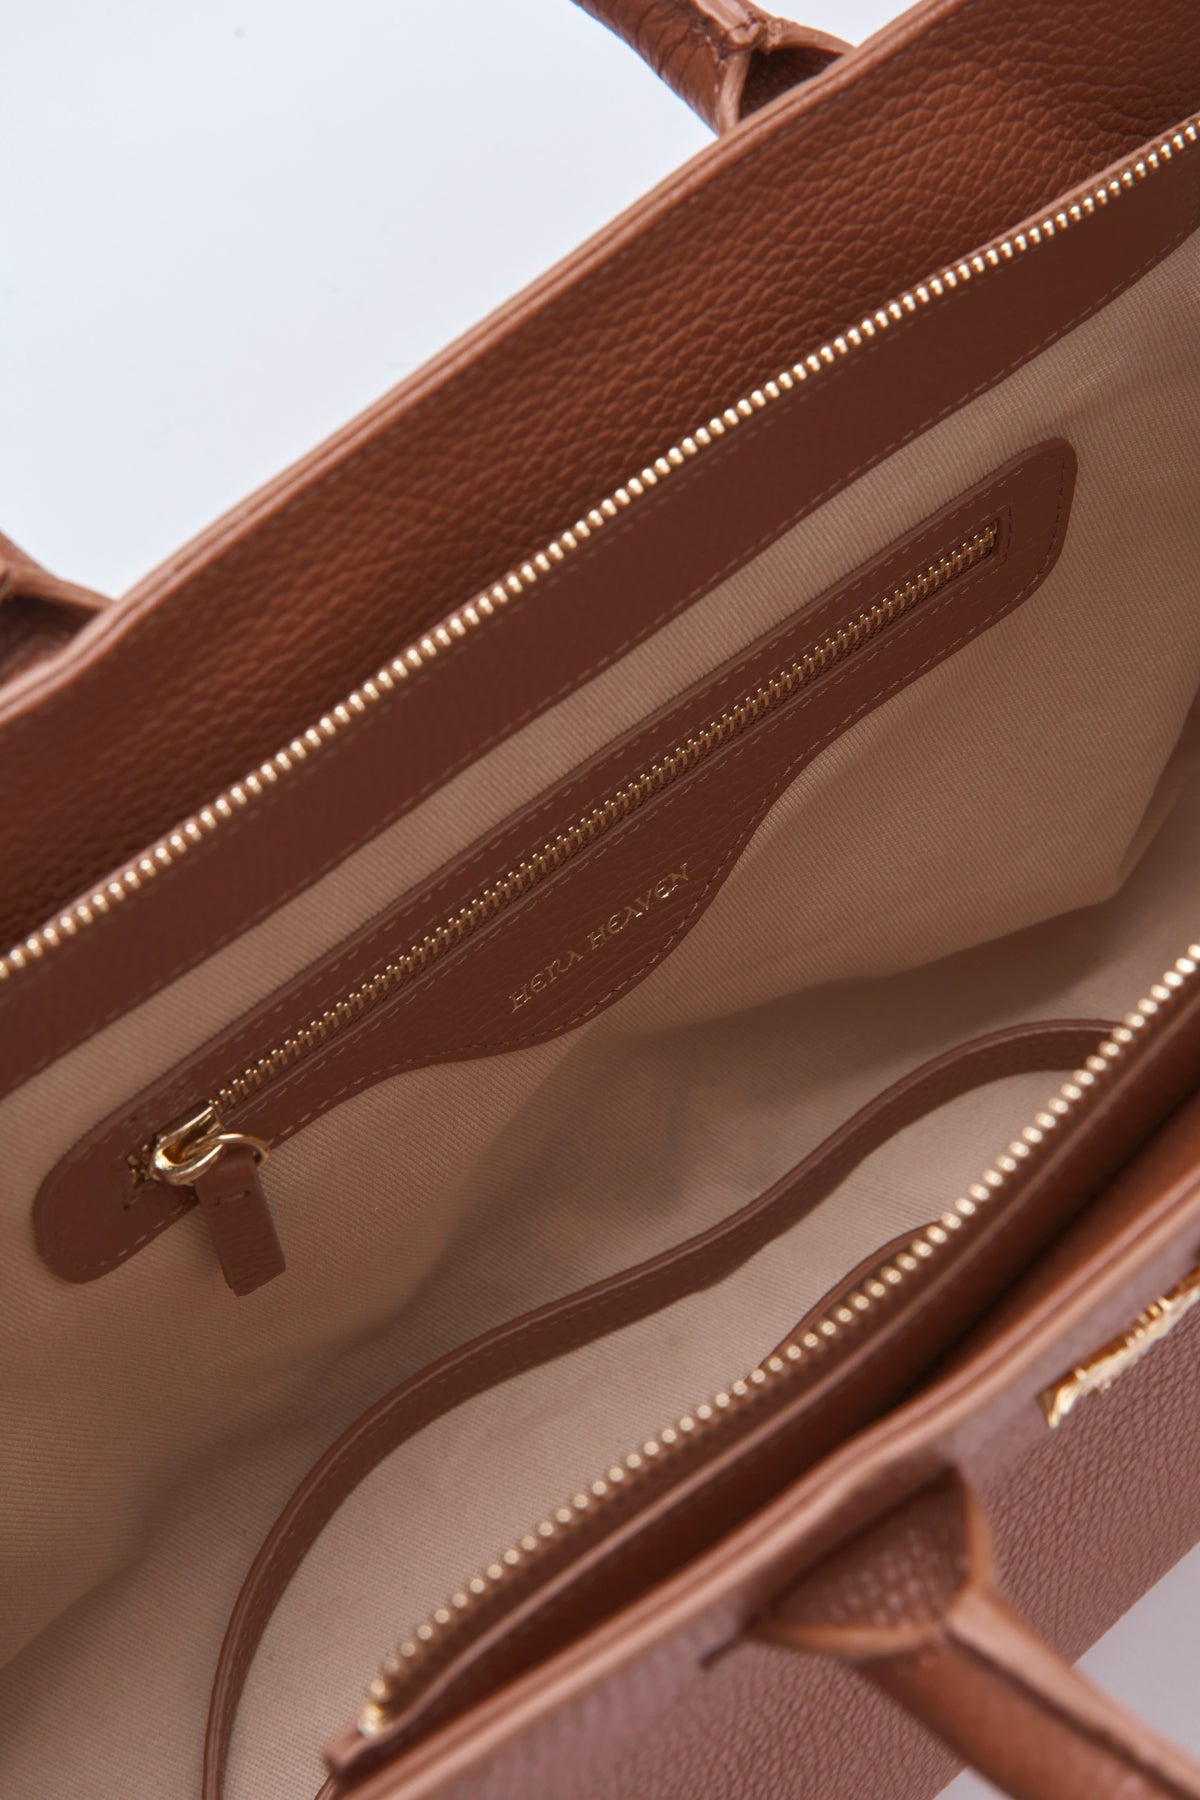 caramel brown ouroboros genuine leather women's tote bag inside